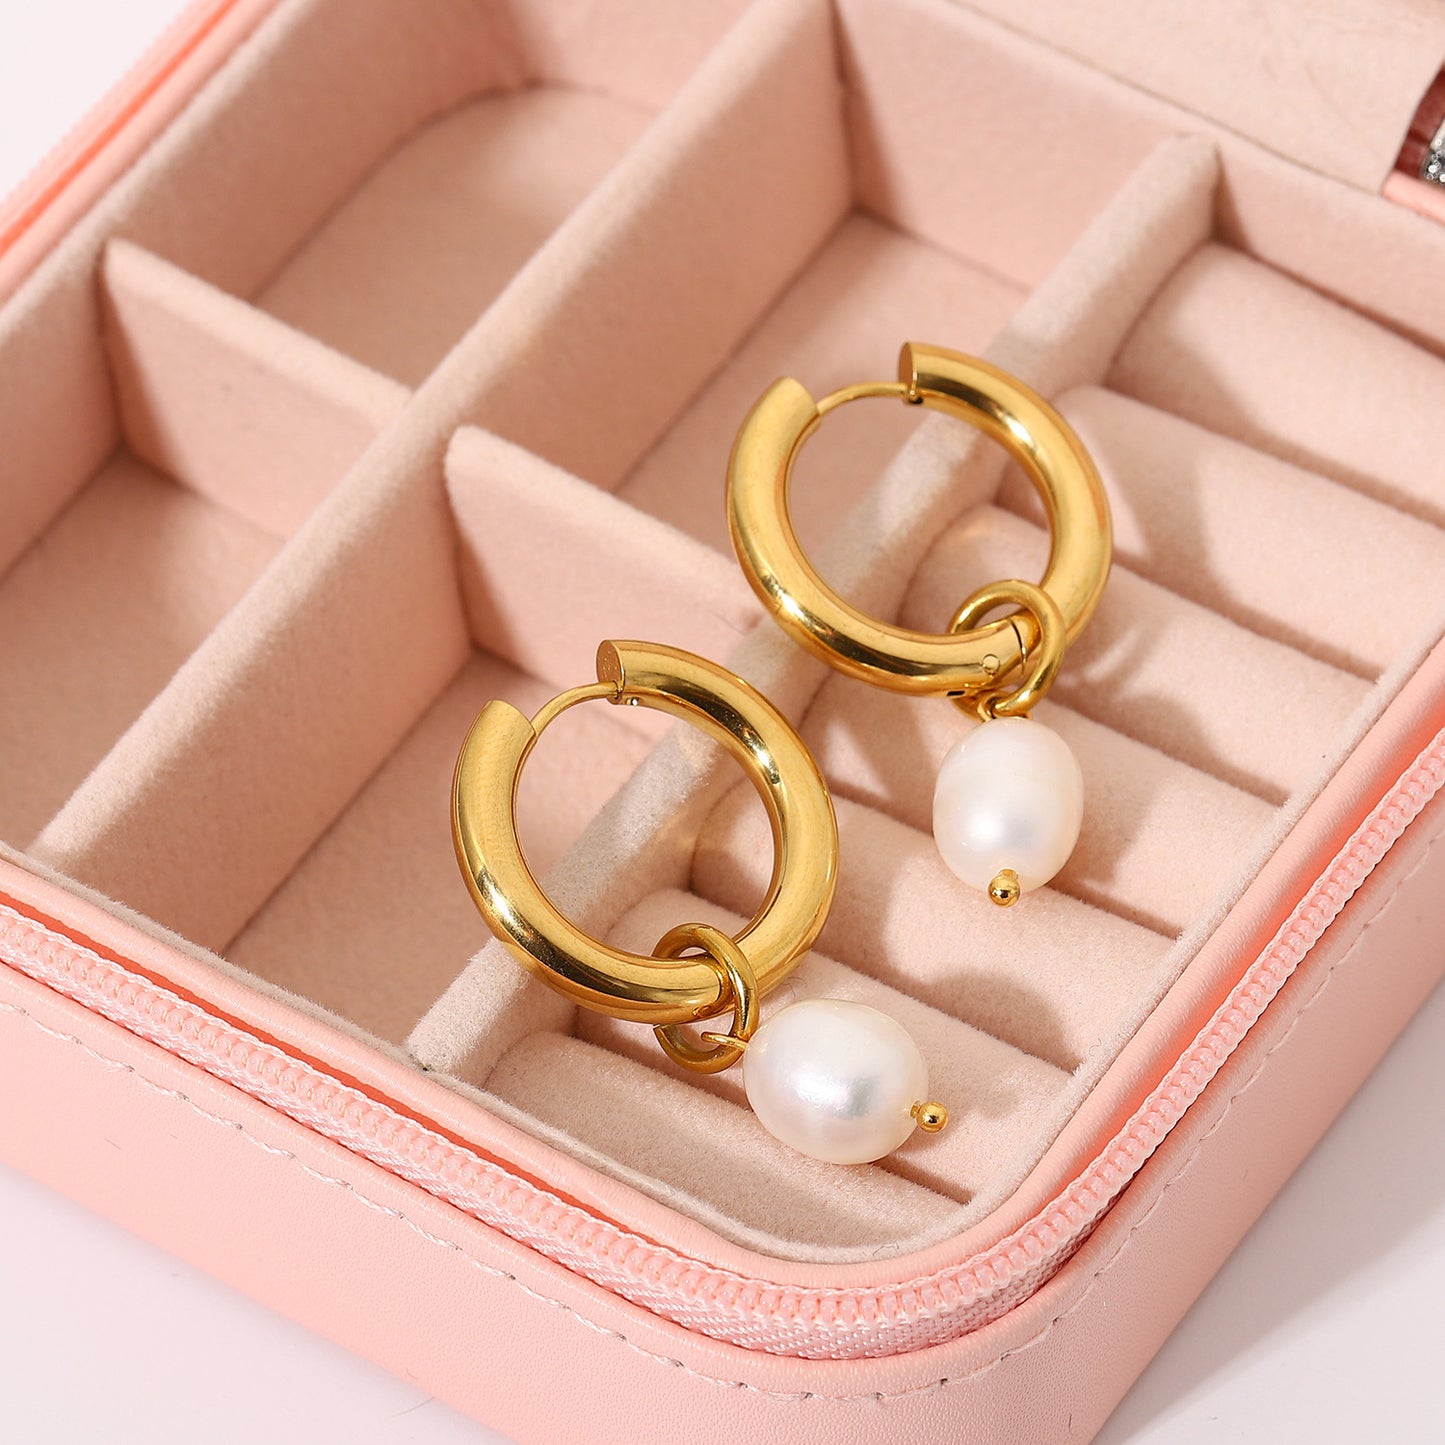 Wholesale Fashion 18k Gold-plated Single Freshwater Pearl Pendant Earrings Gooddiy